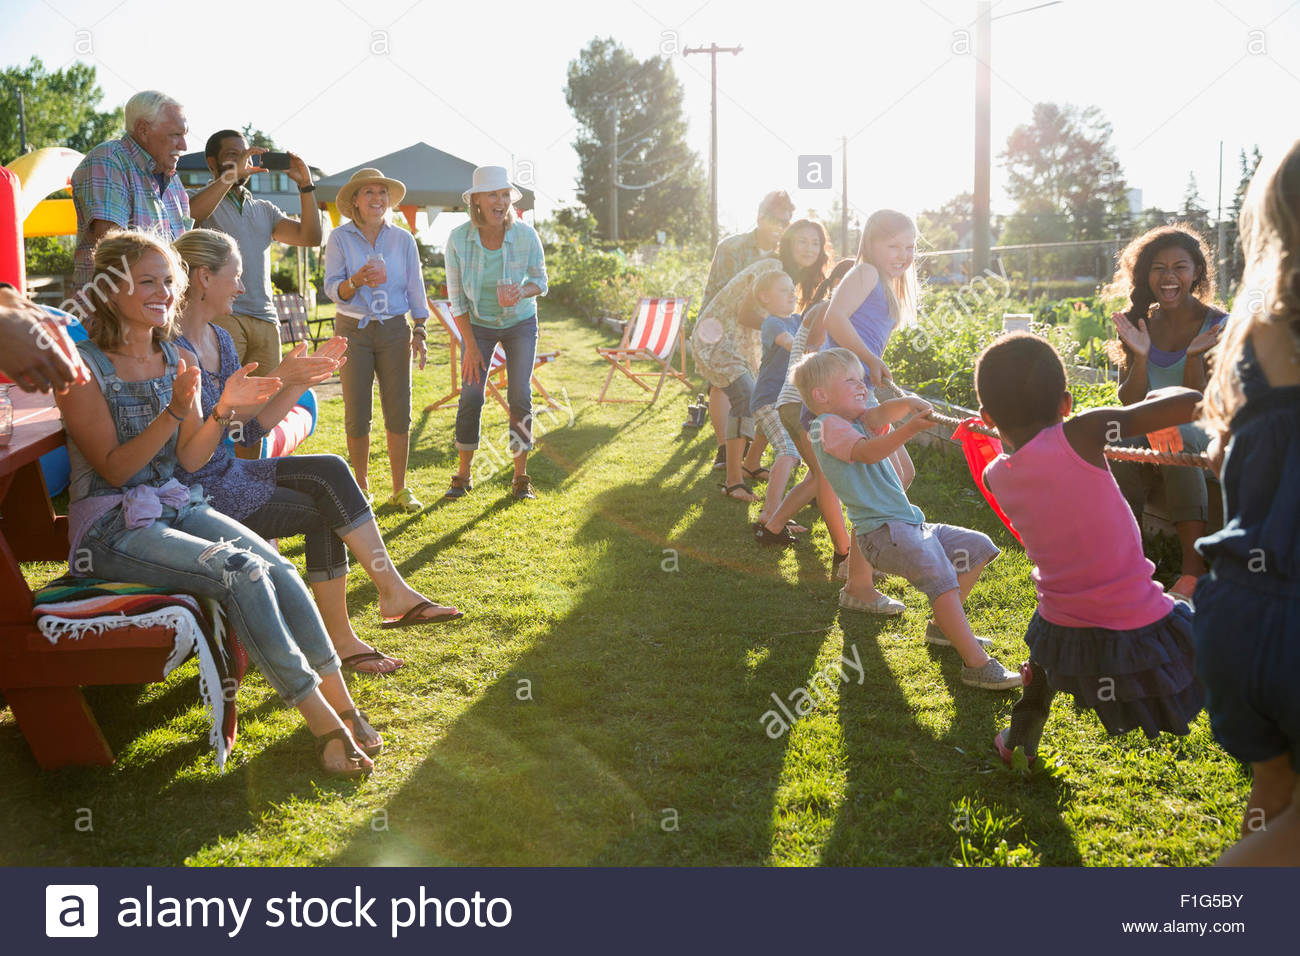 Neighbors cheering kids playing tug-of-war Stock Photo